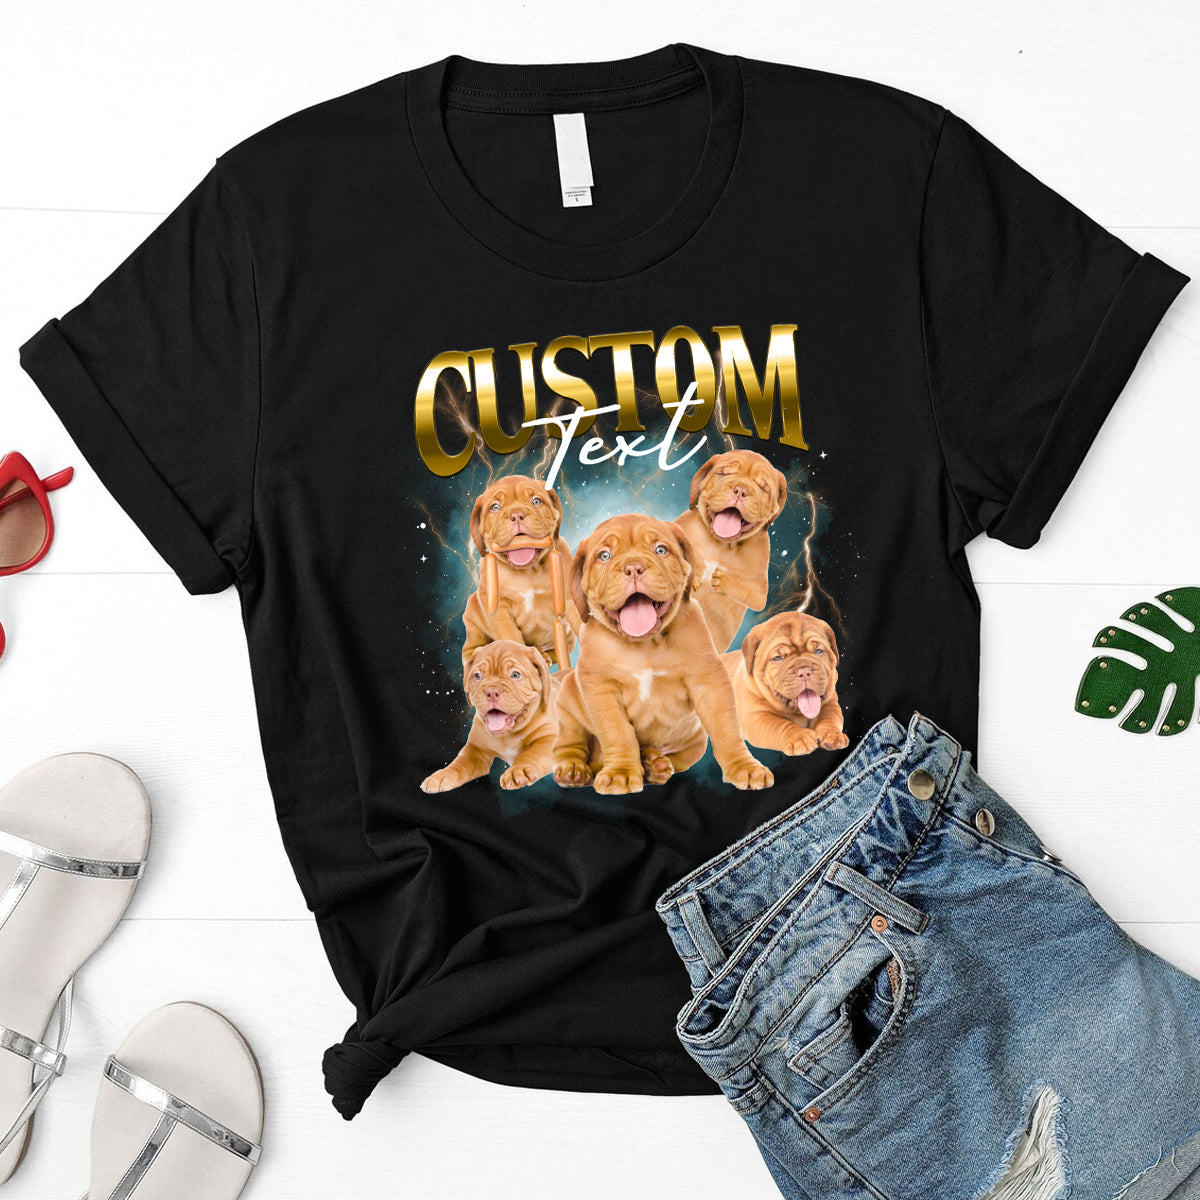 Custom Dog Bootleg Shirt, Custom Dog Shirt, Personalized Dog Bootleg Shirt, Custom Dog's Version, Dog Shirt